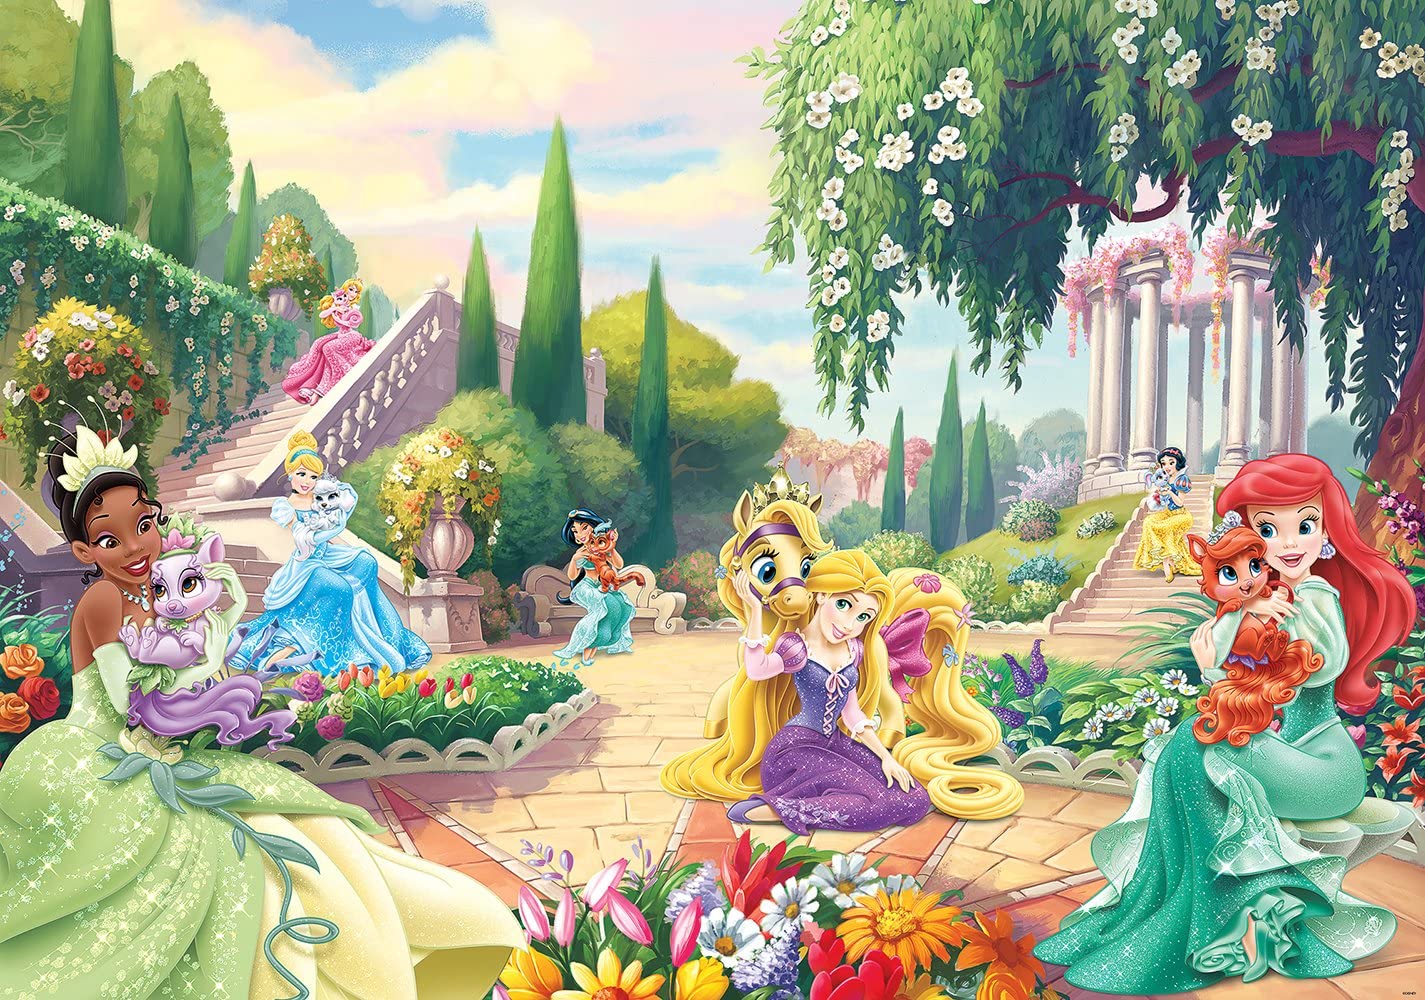 Wizzard & Genius WG 2488V4 LC Disney Princess Tiana Arielle Photo Wallpaper, Multi Colour: Amazon.ca: Tools & Home Improvement